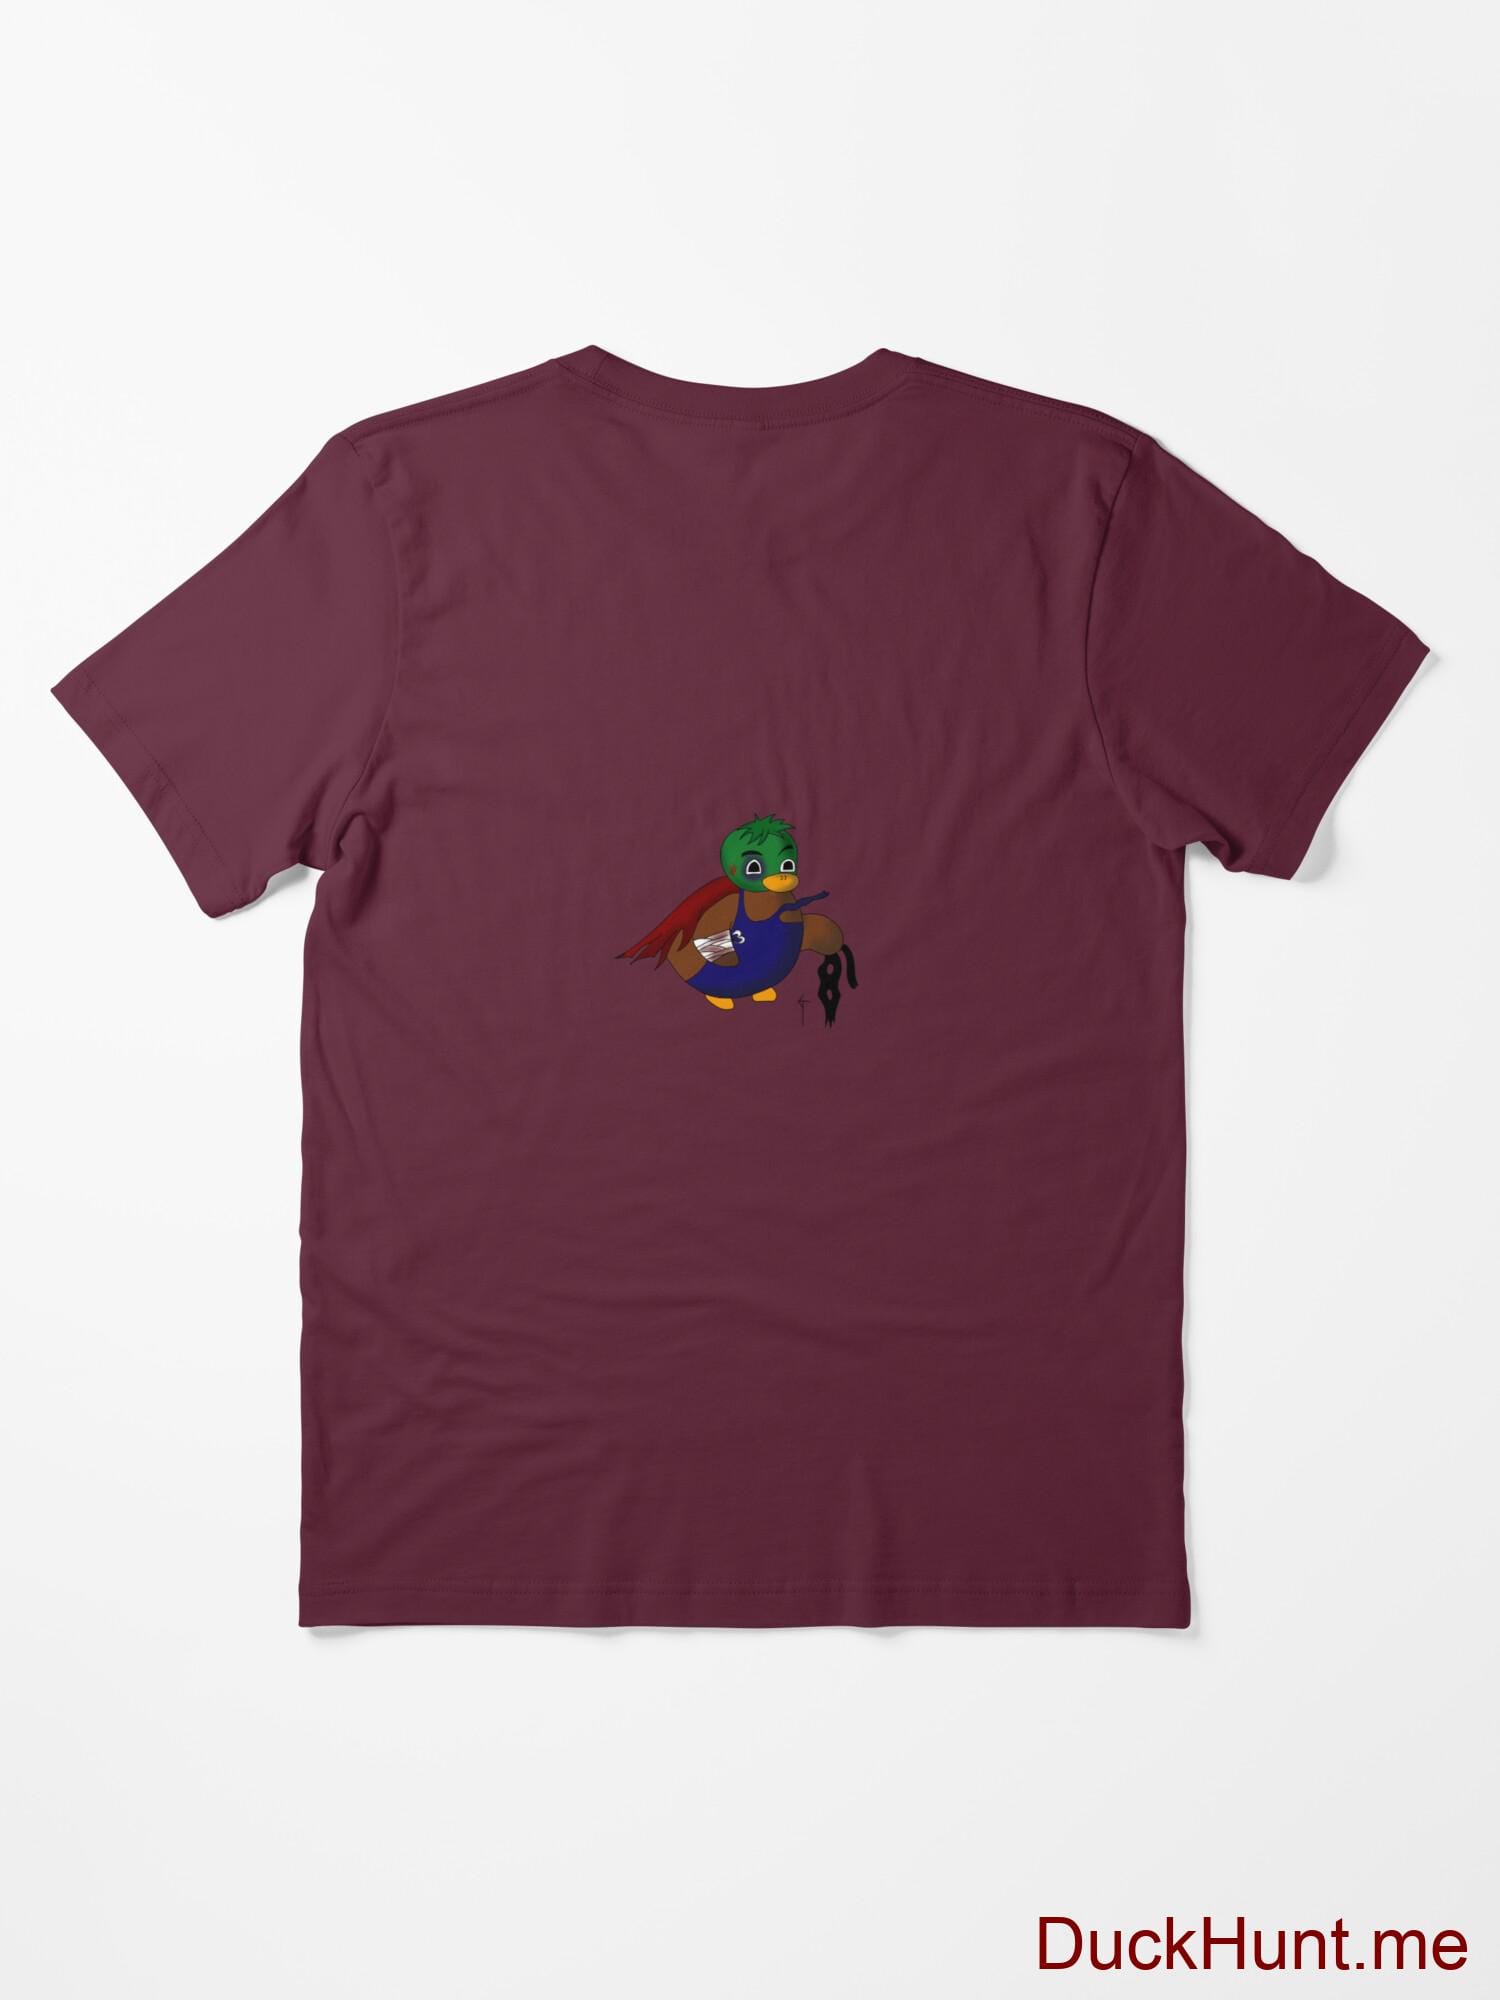 Dead DuckHunt Boss (smokeless) Dark Red Essential T-Shirt (Back printed) alternative image 1